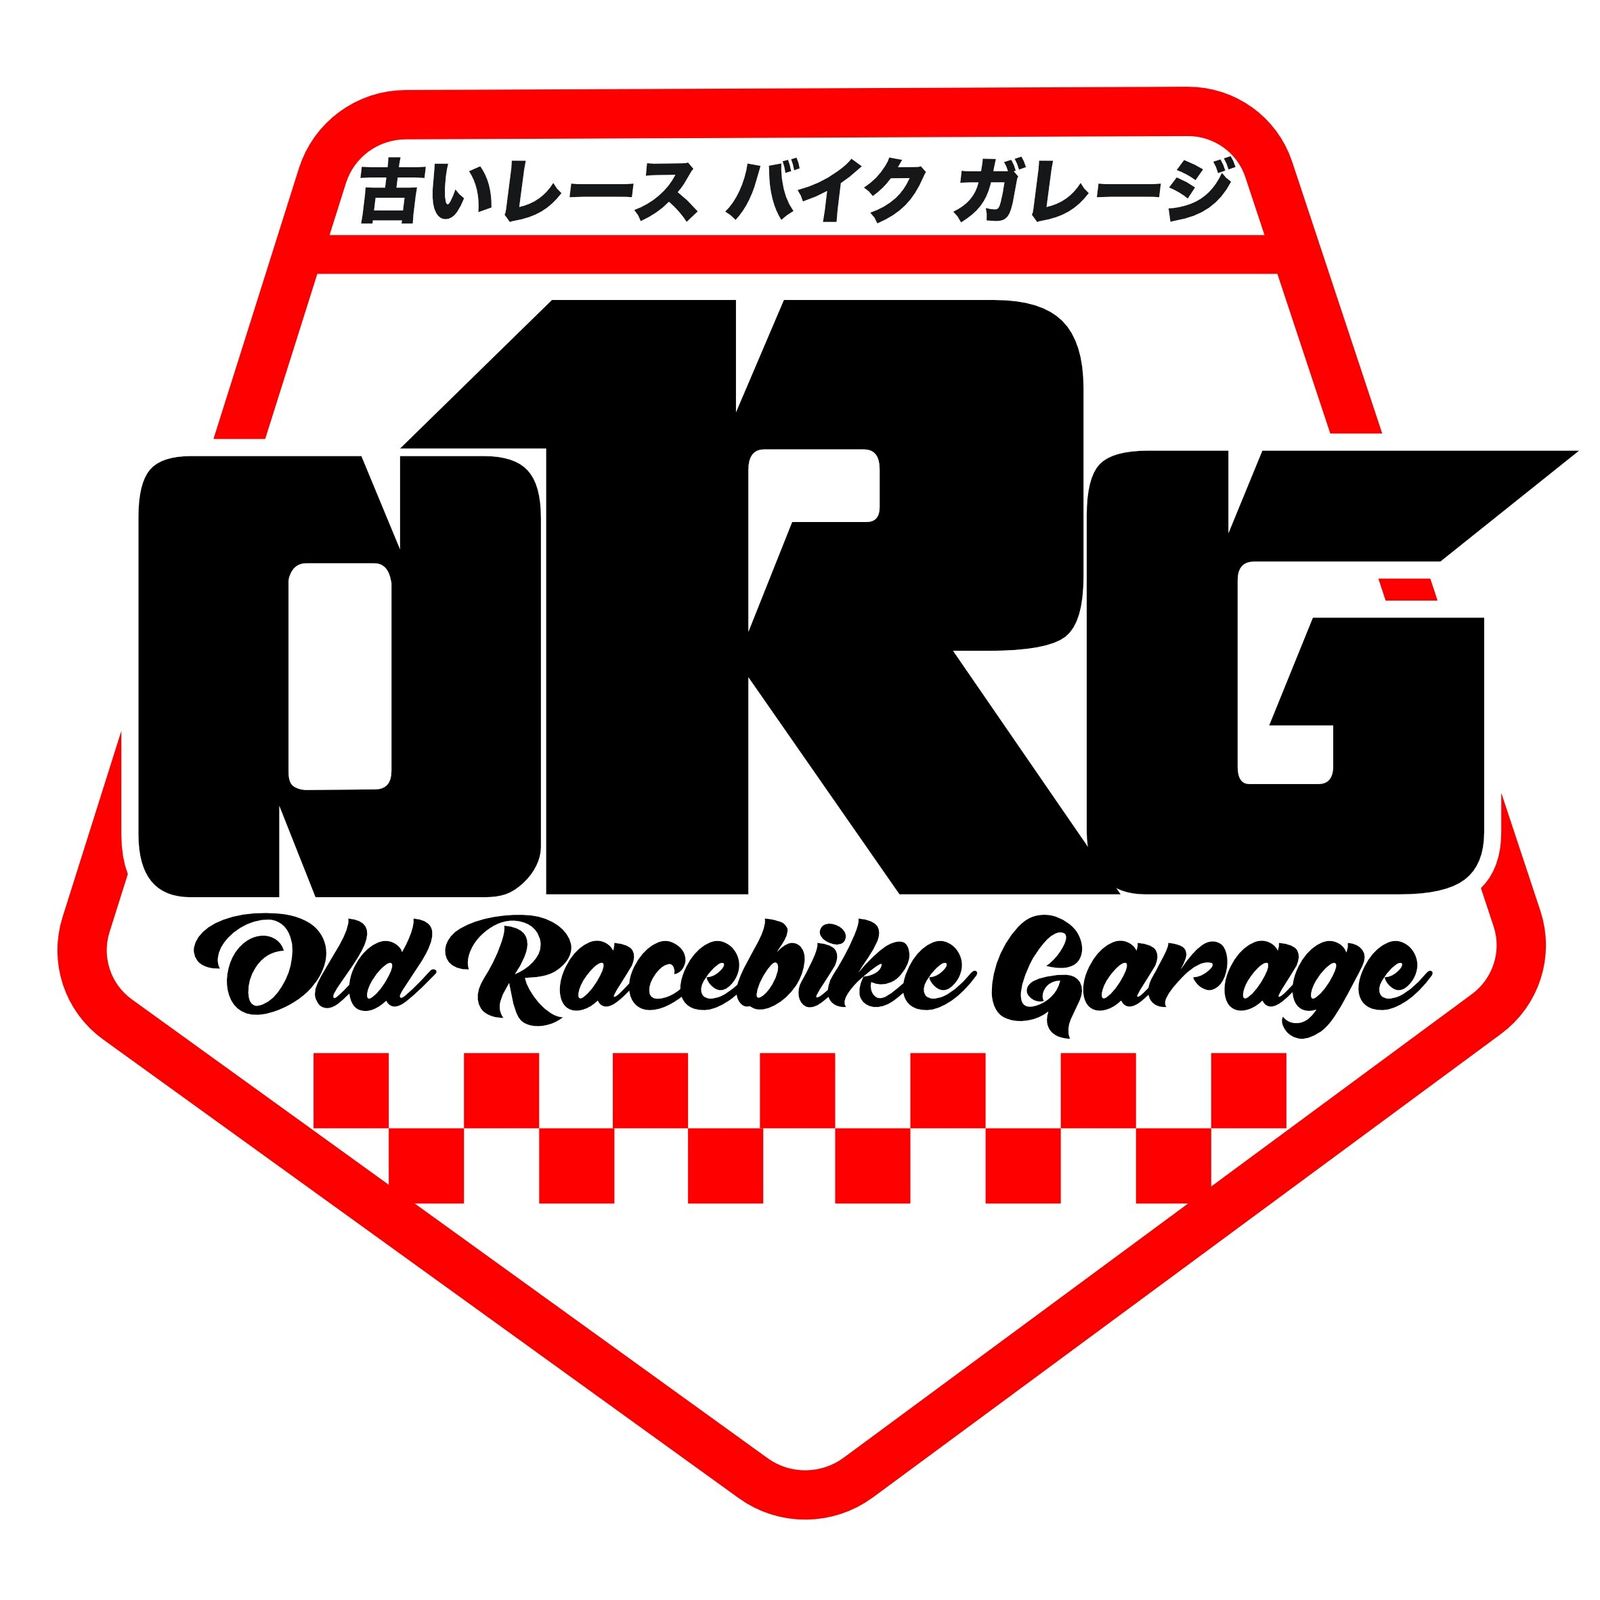 Old Racebike Garage Logo